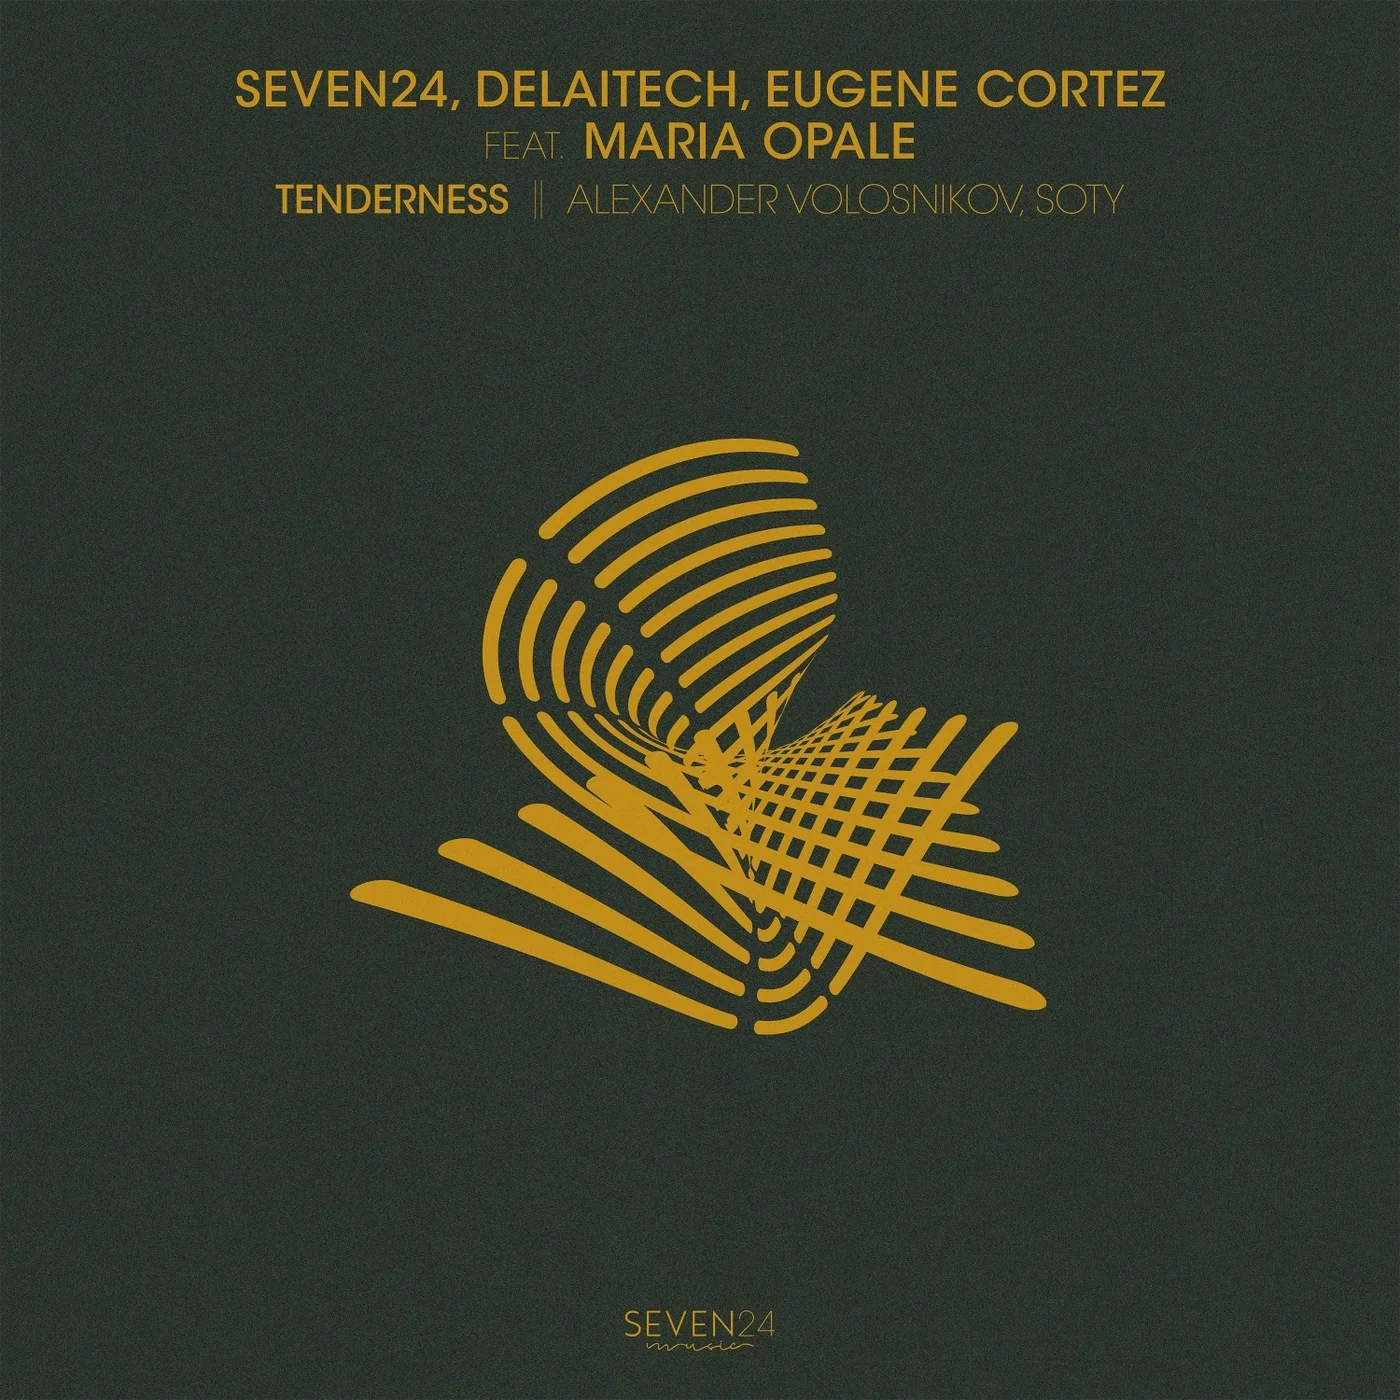 Seven24, Delaitech, Eugene Cortez - Tenderness Feat. Maria Opale (Alexander Volosnikov Remix)